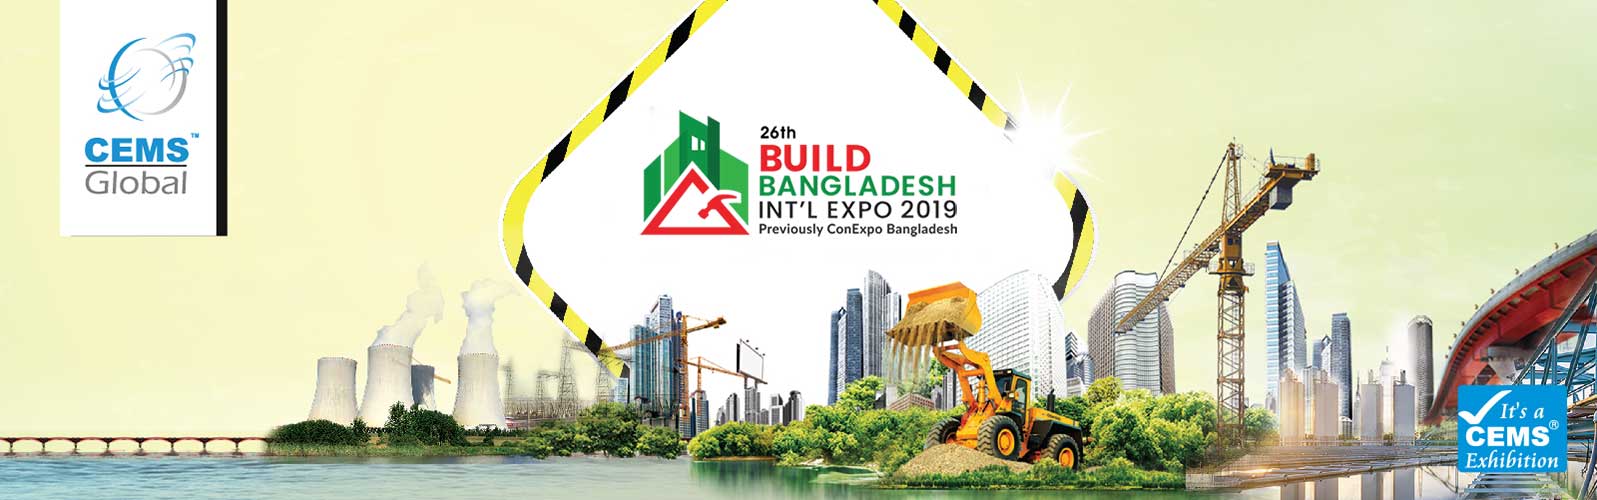 Build-Bangladesh-1597X500-min.jpg